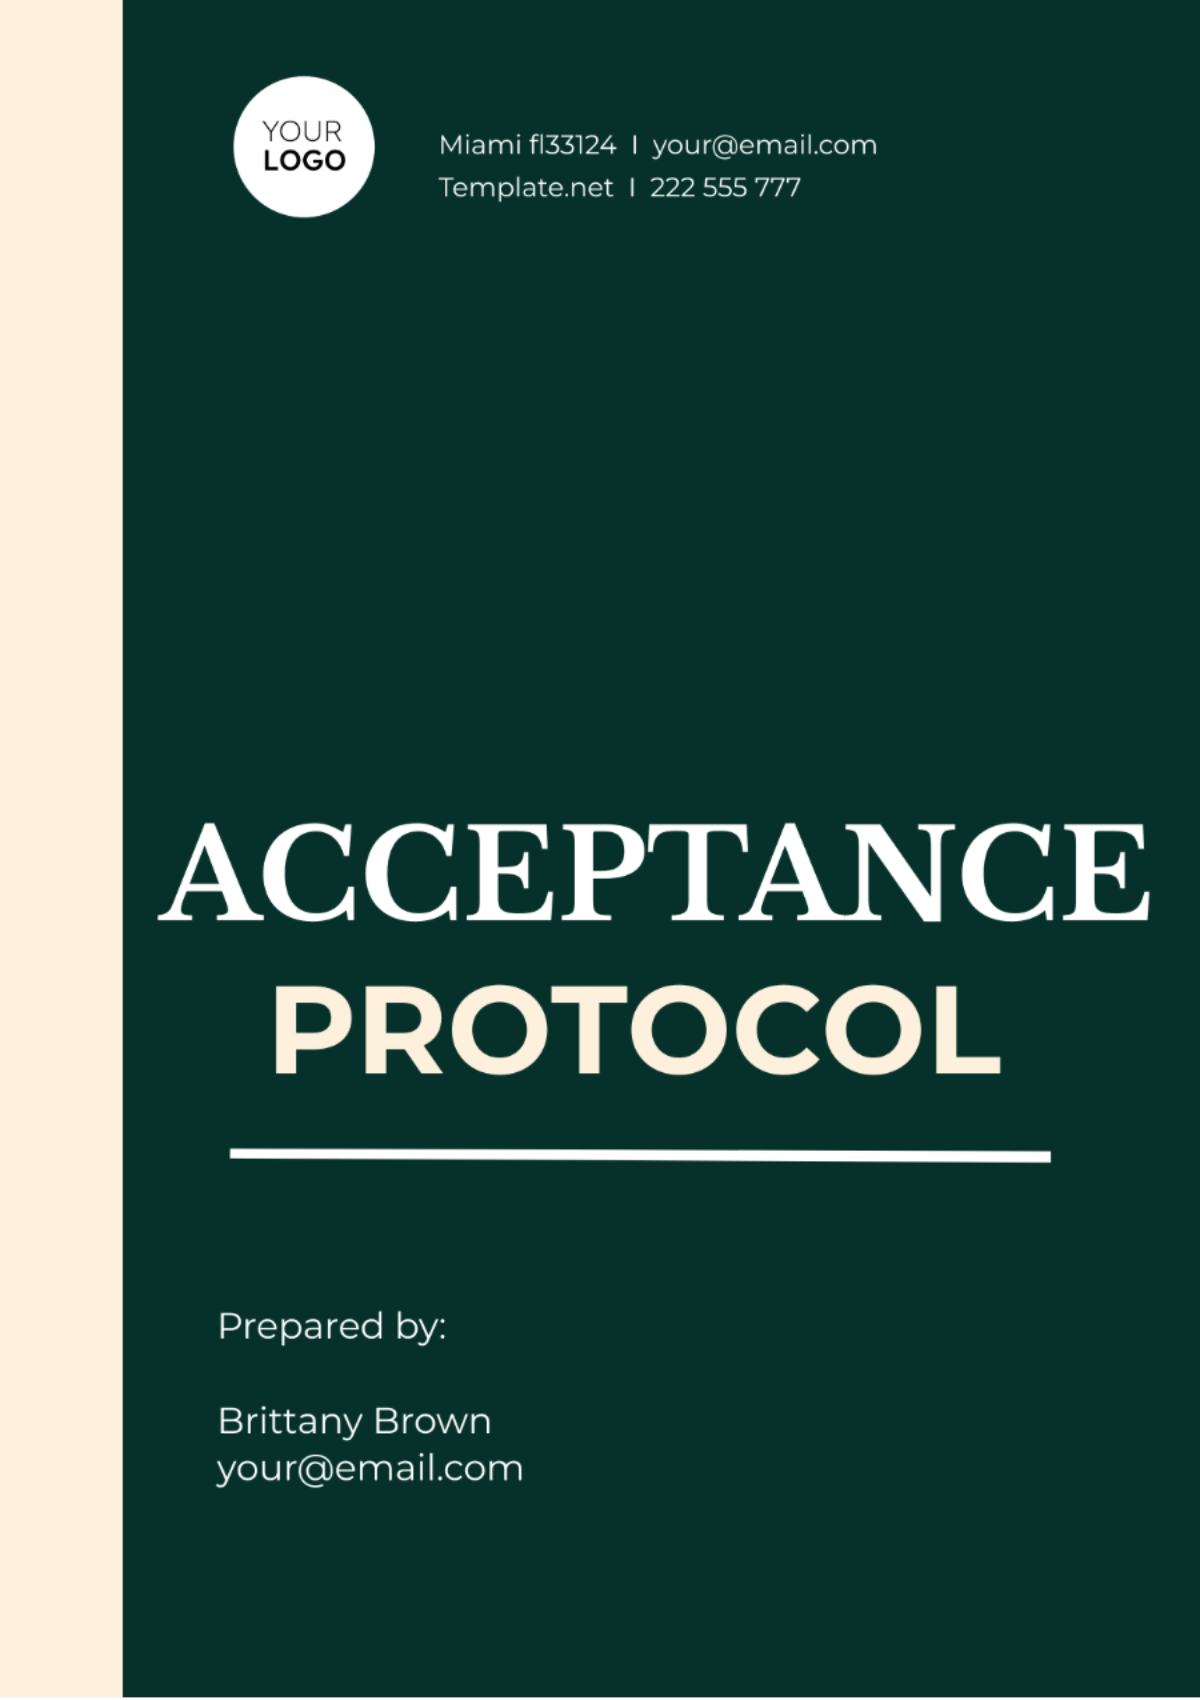 Free Acceptance Protocol Template